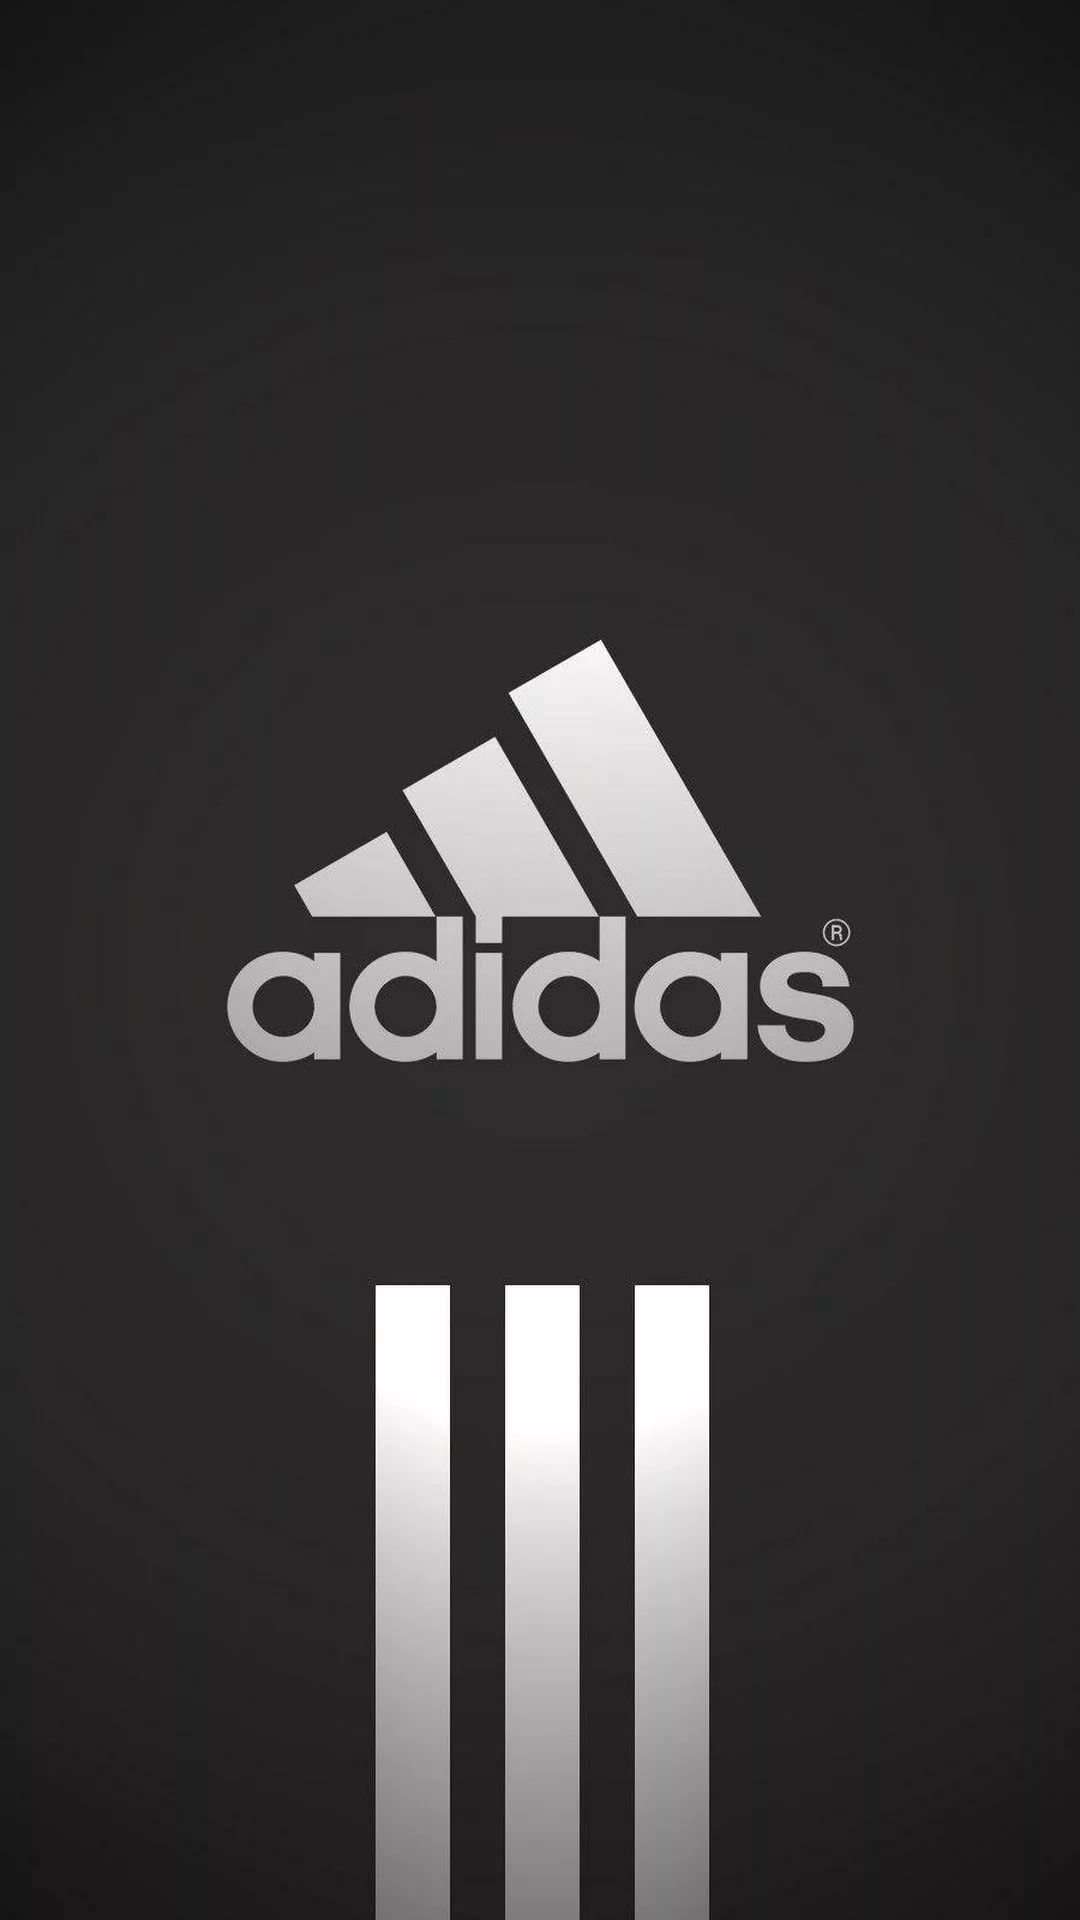 Adidas iPhone Wallpaper